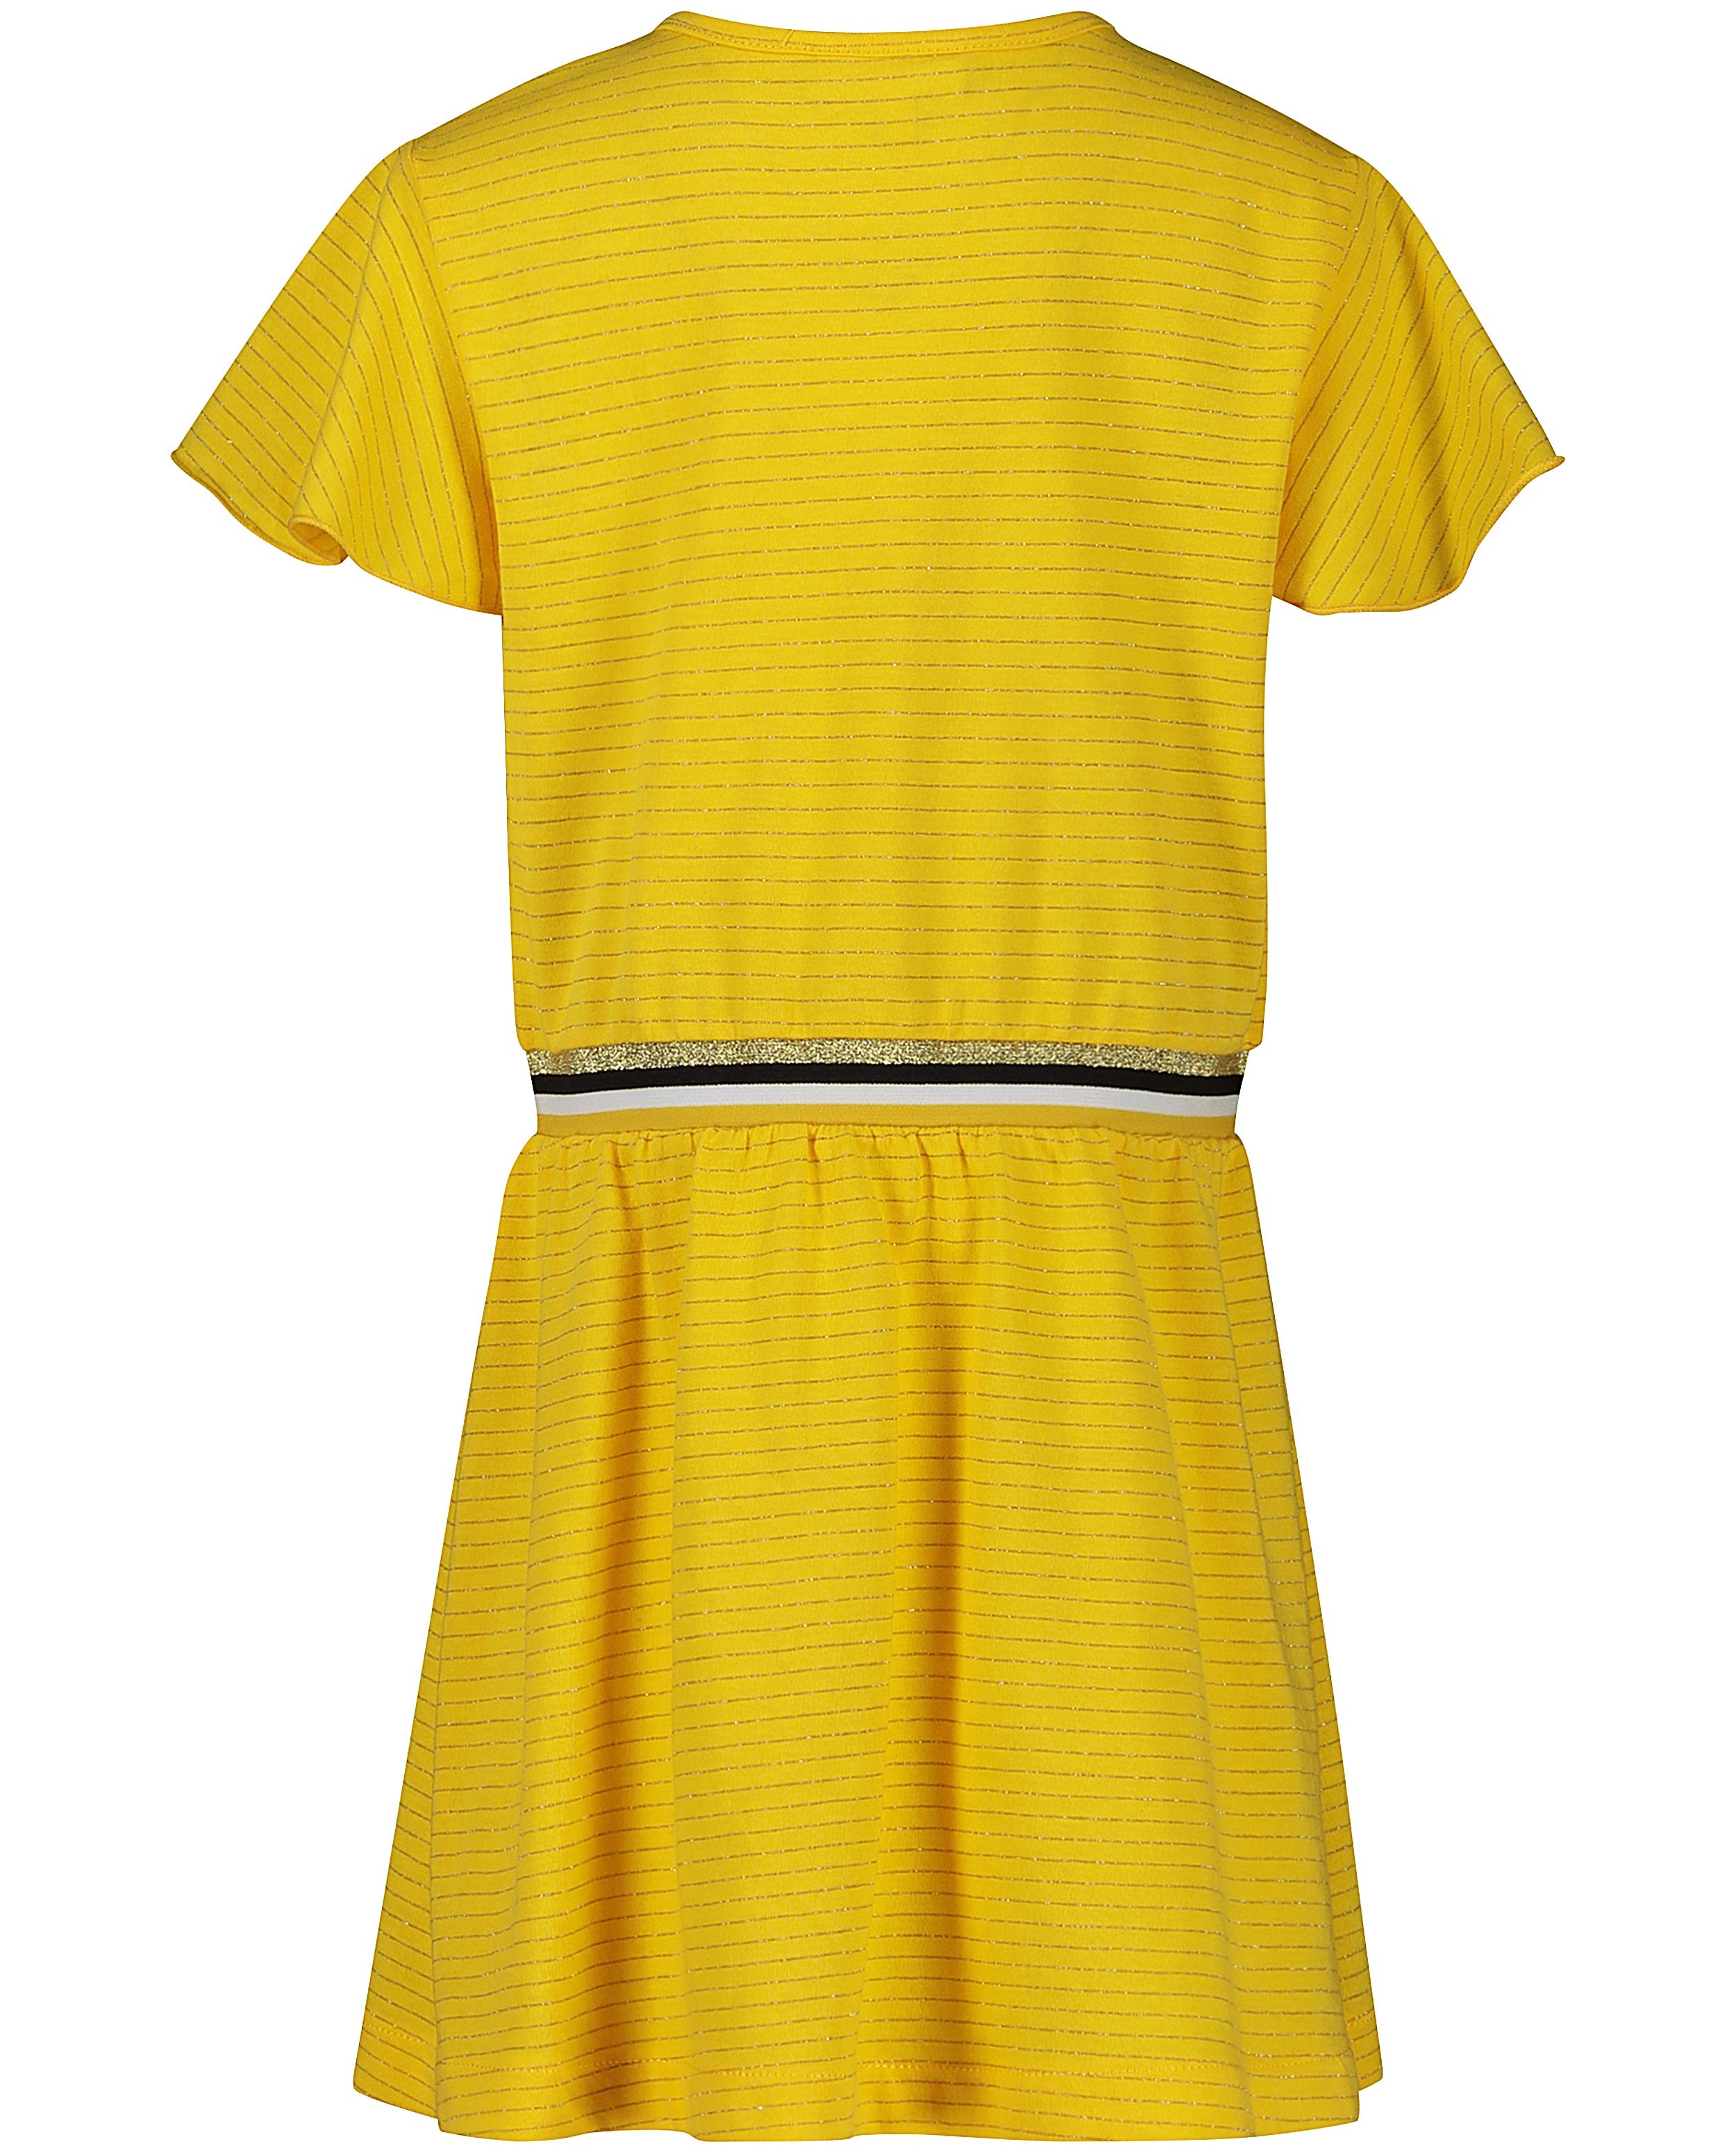 Kleedjes - Geel jurkje met strepen